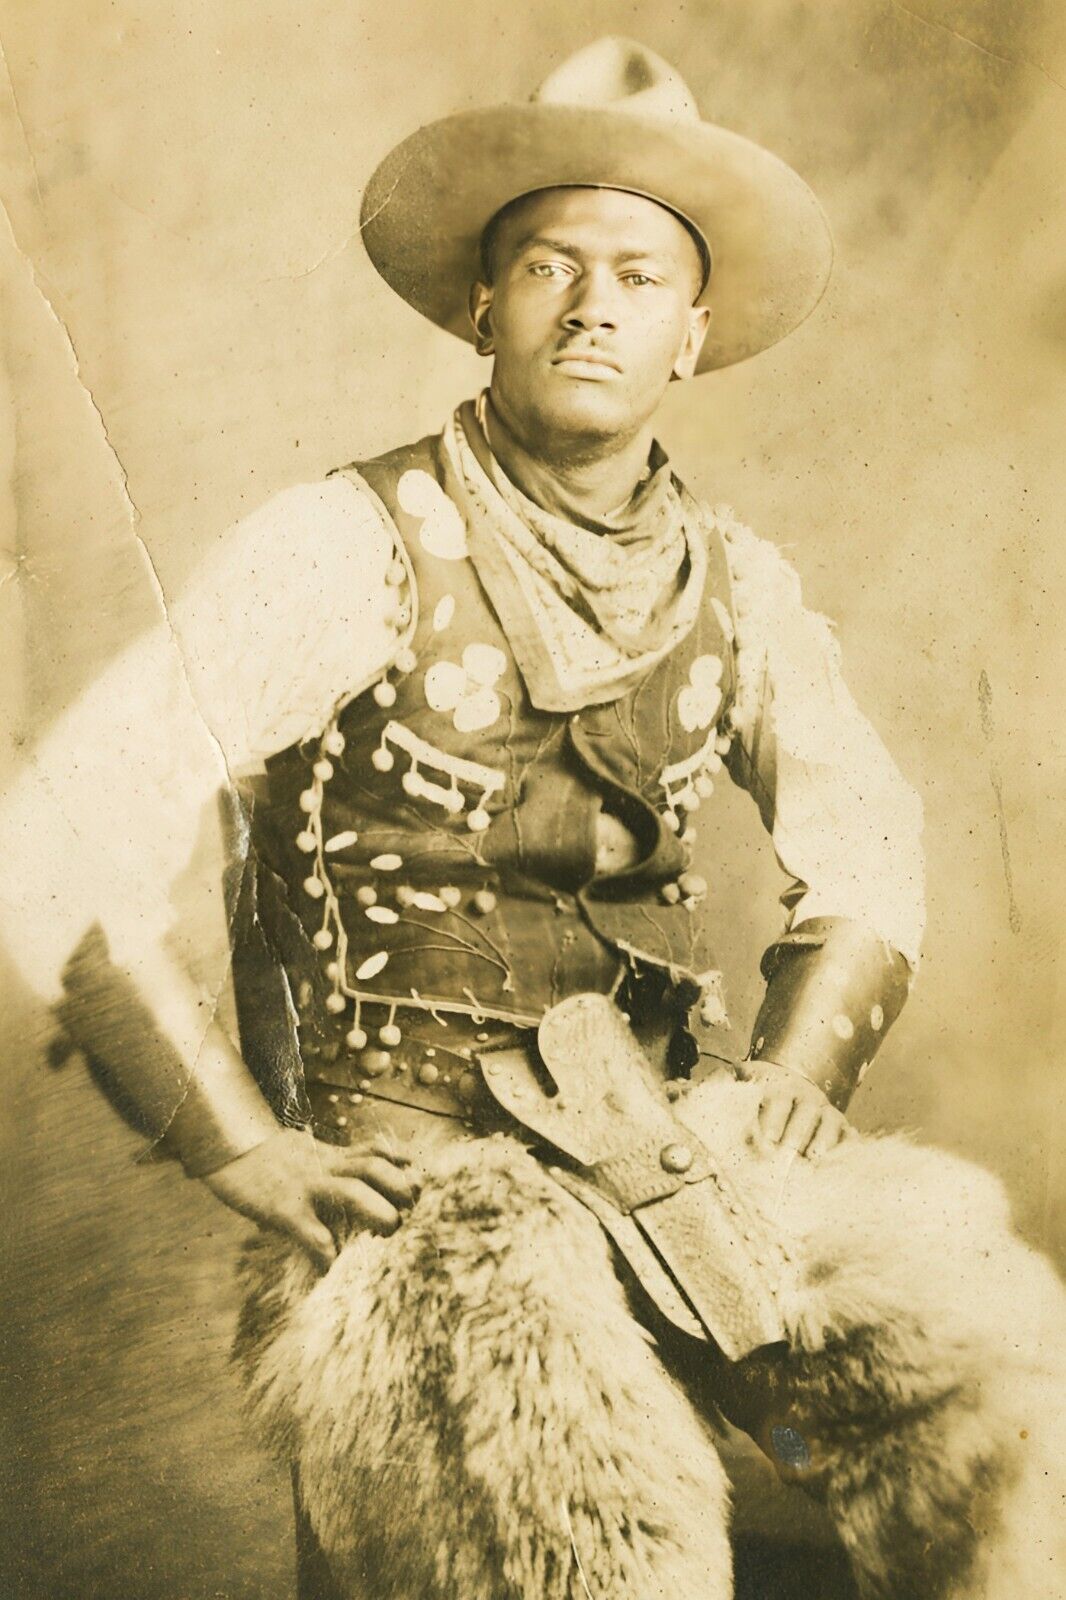 African American Cowboy Portrait - 1900s - 4 x 6 Photo Print